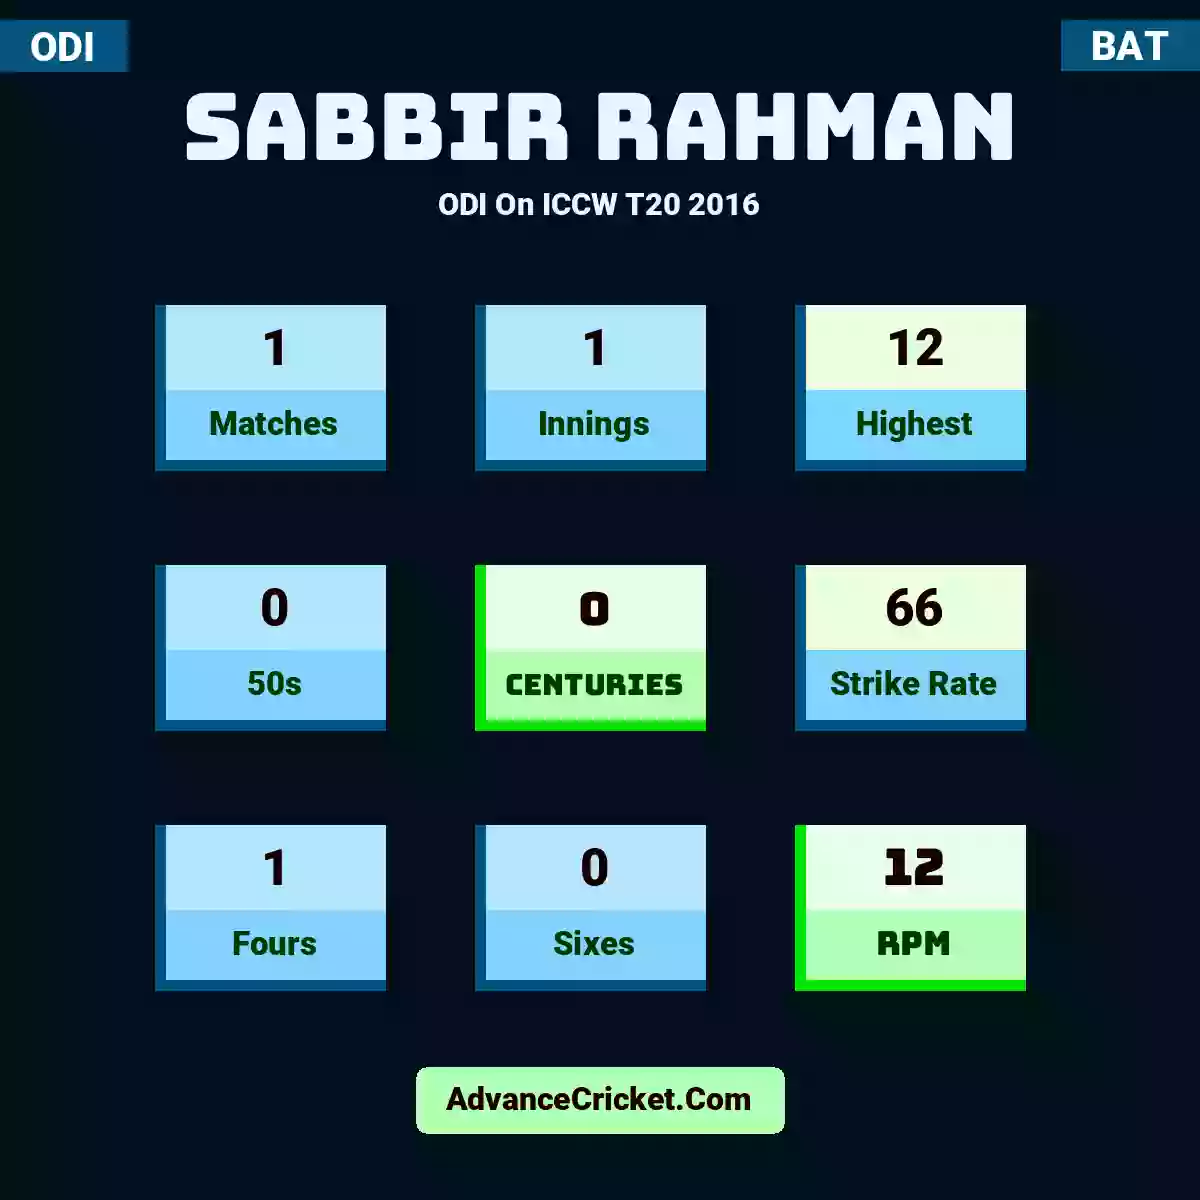 Sabbir Rahman ODI  On ICCW T20 2016, Sabbir Rahman played 1 matches, scored 12 runs as highest, 0 half-centuries, and 0 centuries, with a strike rate of 66. S.Rahman hit 1 fours and 0 sixes, with an RPM of 12.